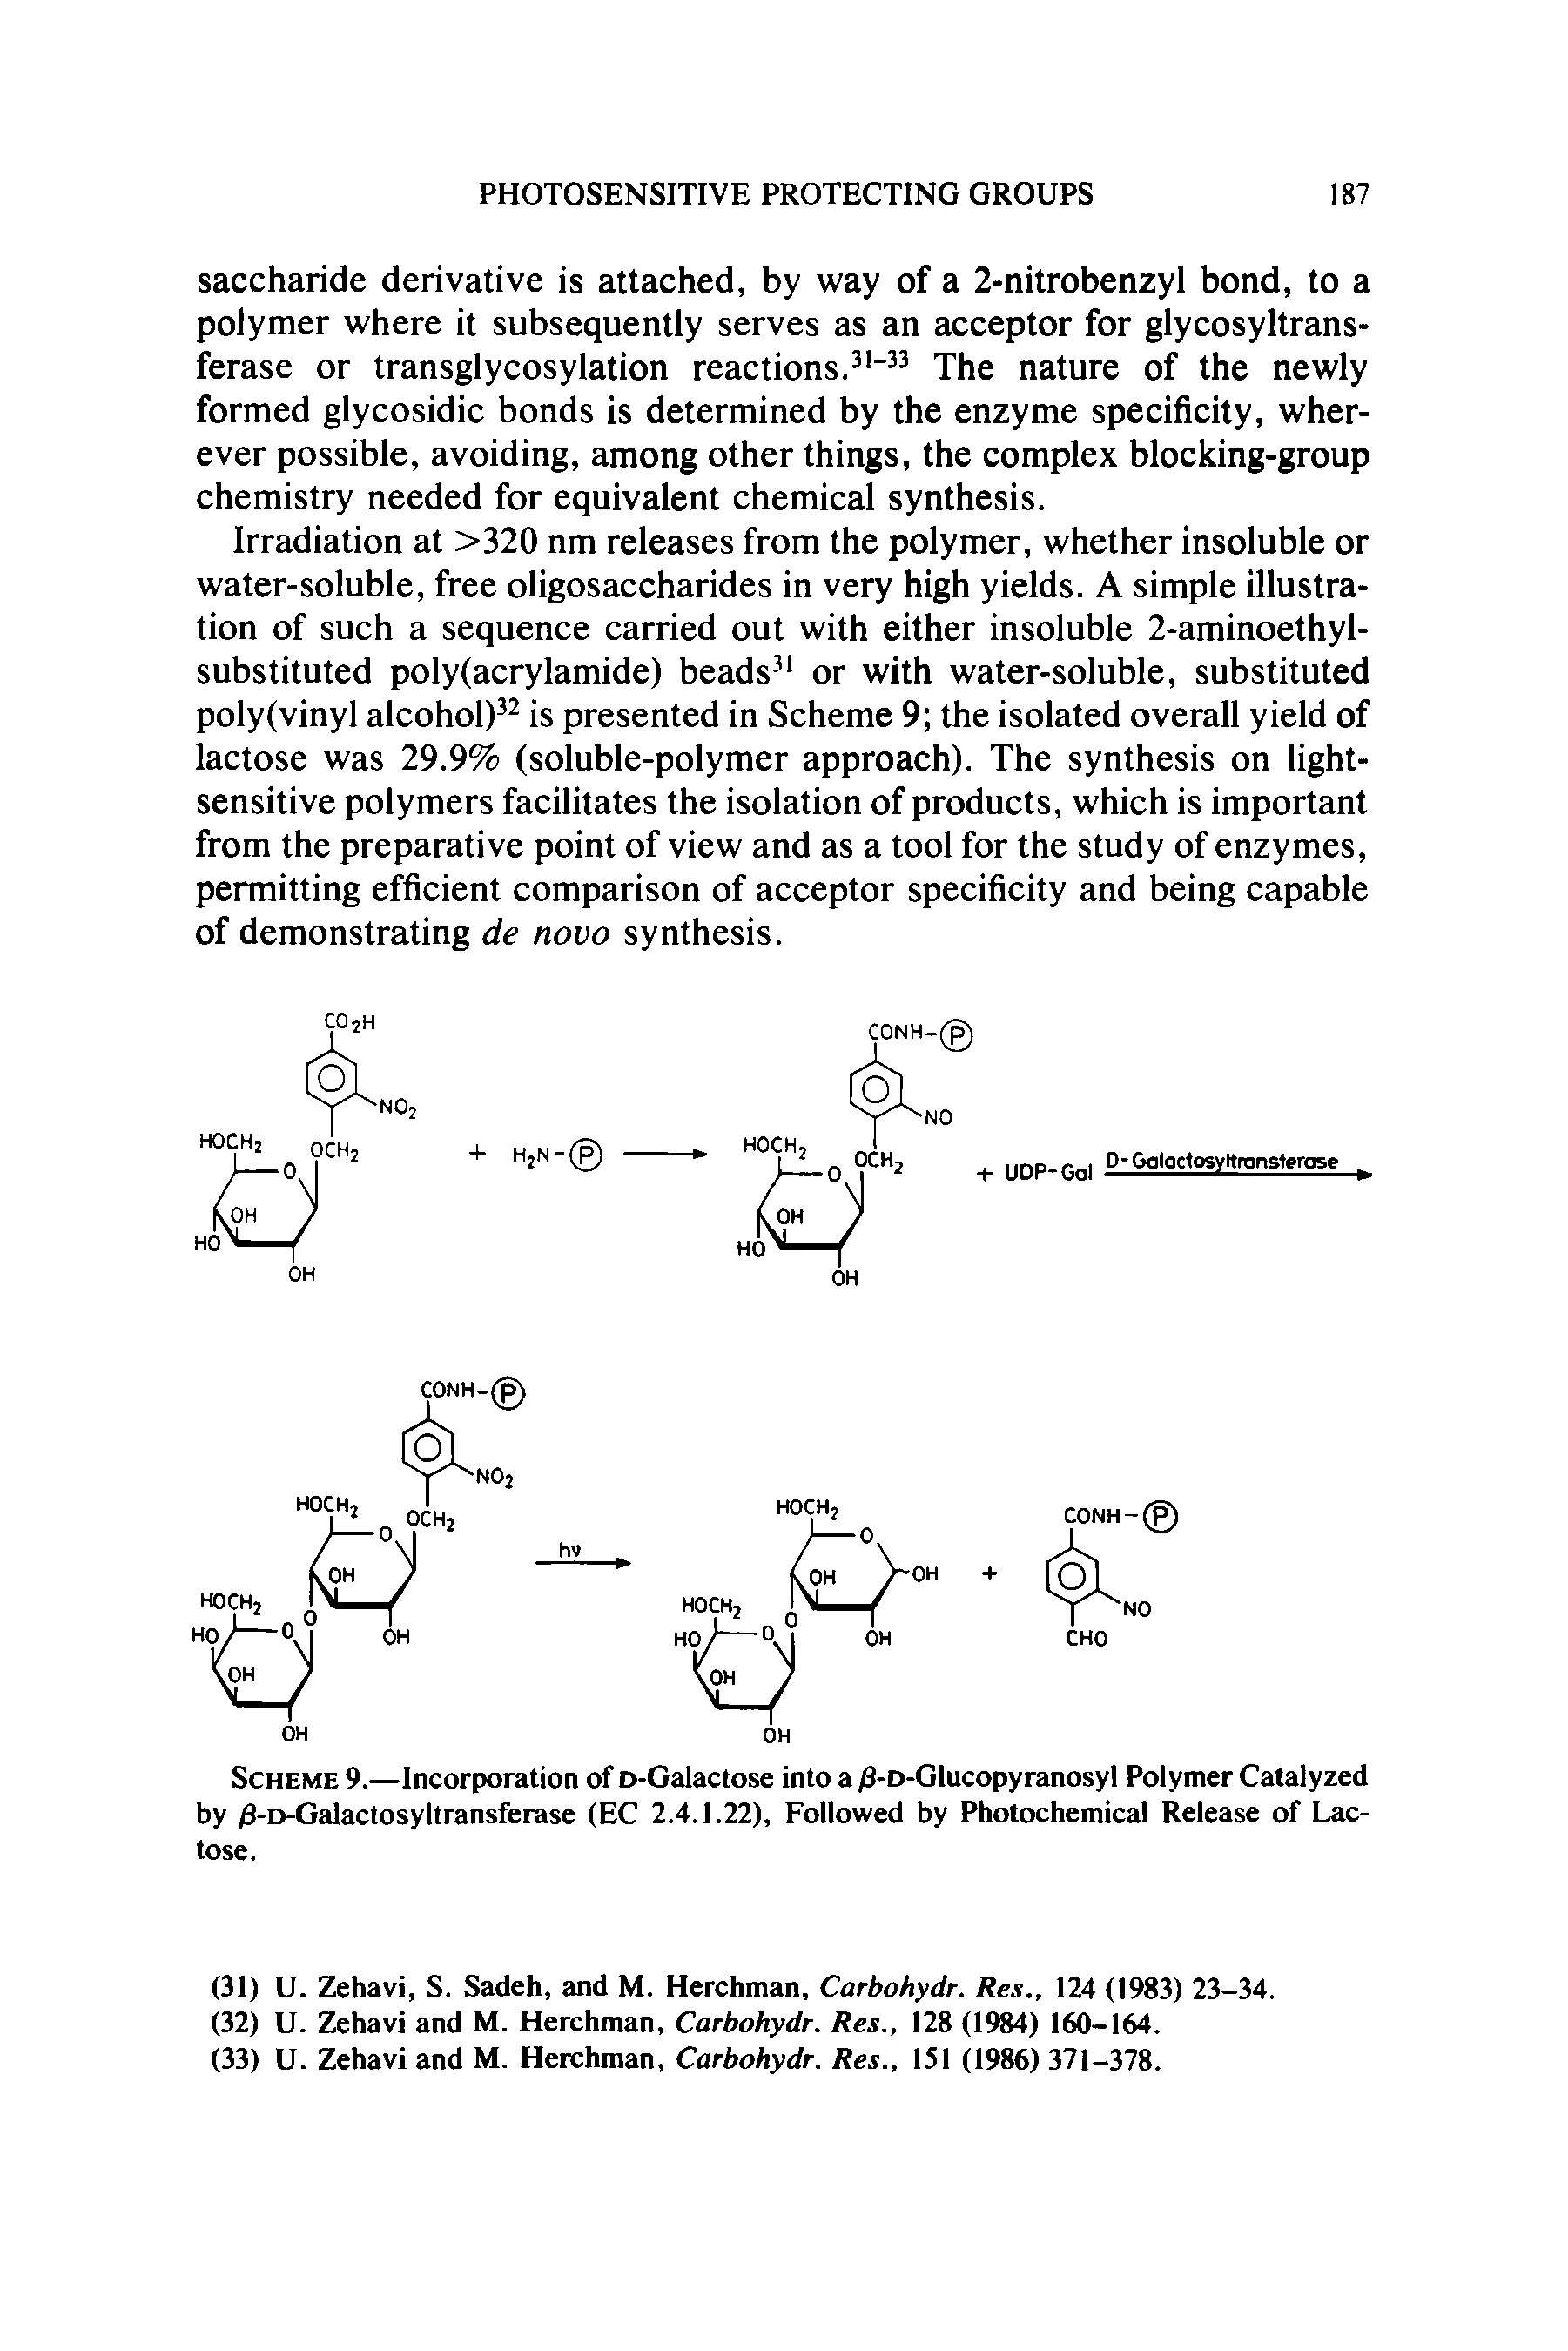 Scheme 9.—Incorporation of o-Galactose into a /3-D-Glucopyranosyl Polymer Catalyzed by /3-D-Galactosyltransferase (EC 2.4.1.22), Followed by Photochemical Release of Lactose.